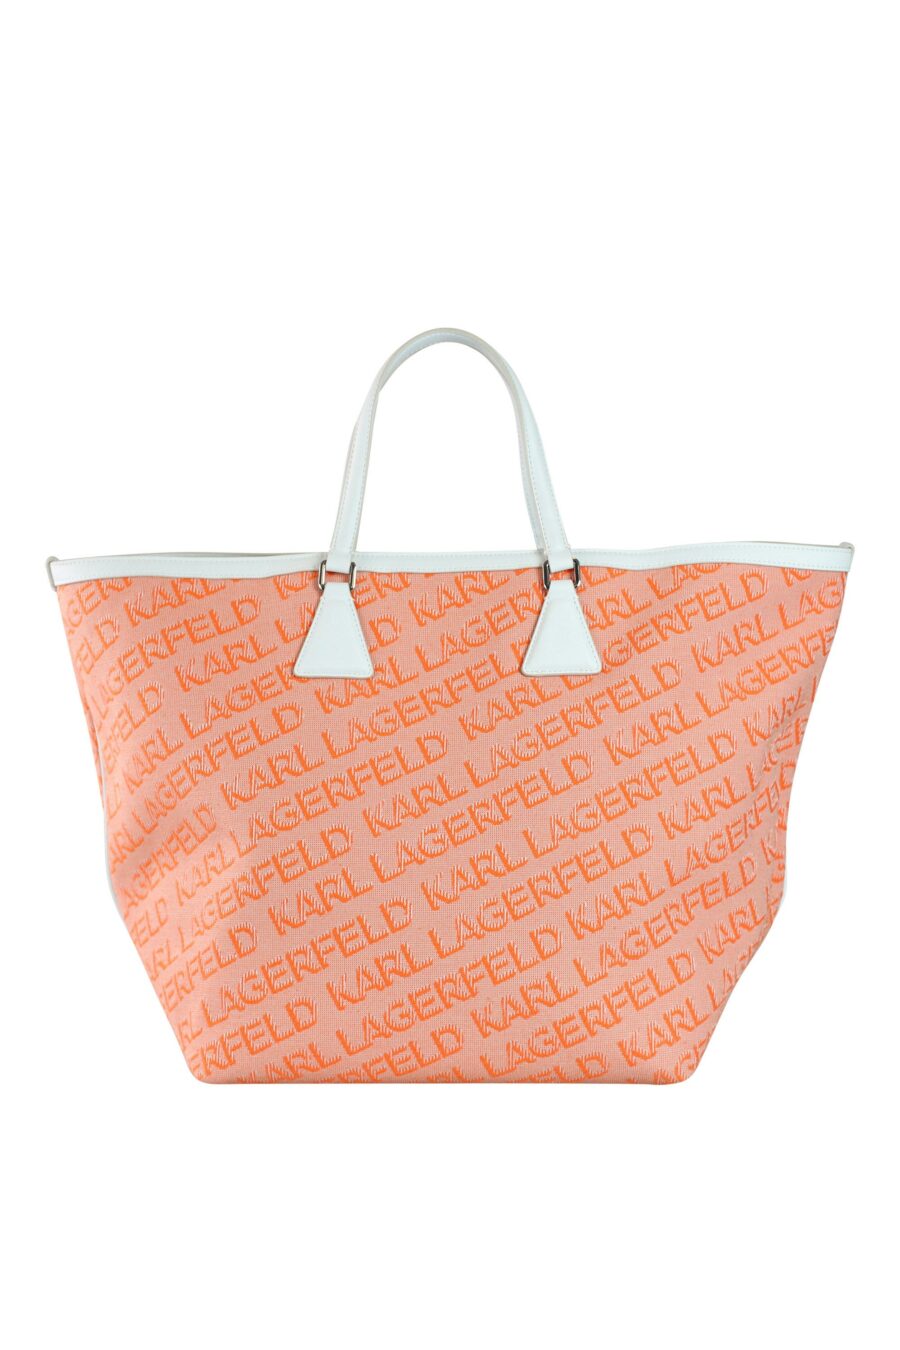 Tote bag orange "all over logo" - 8720744234210